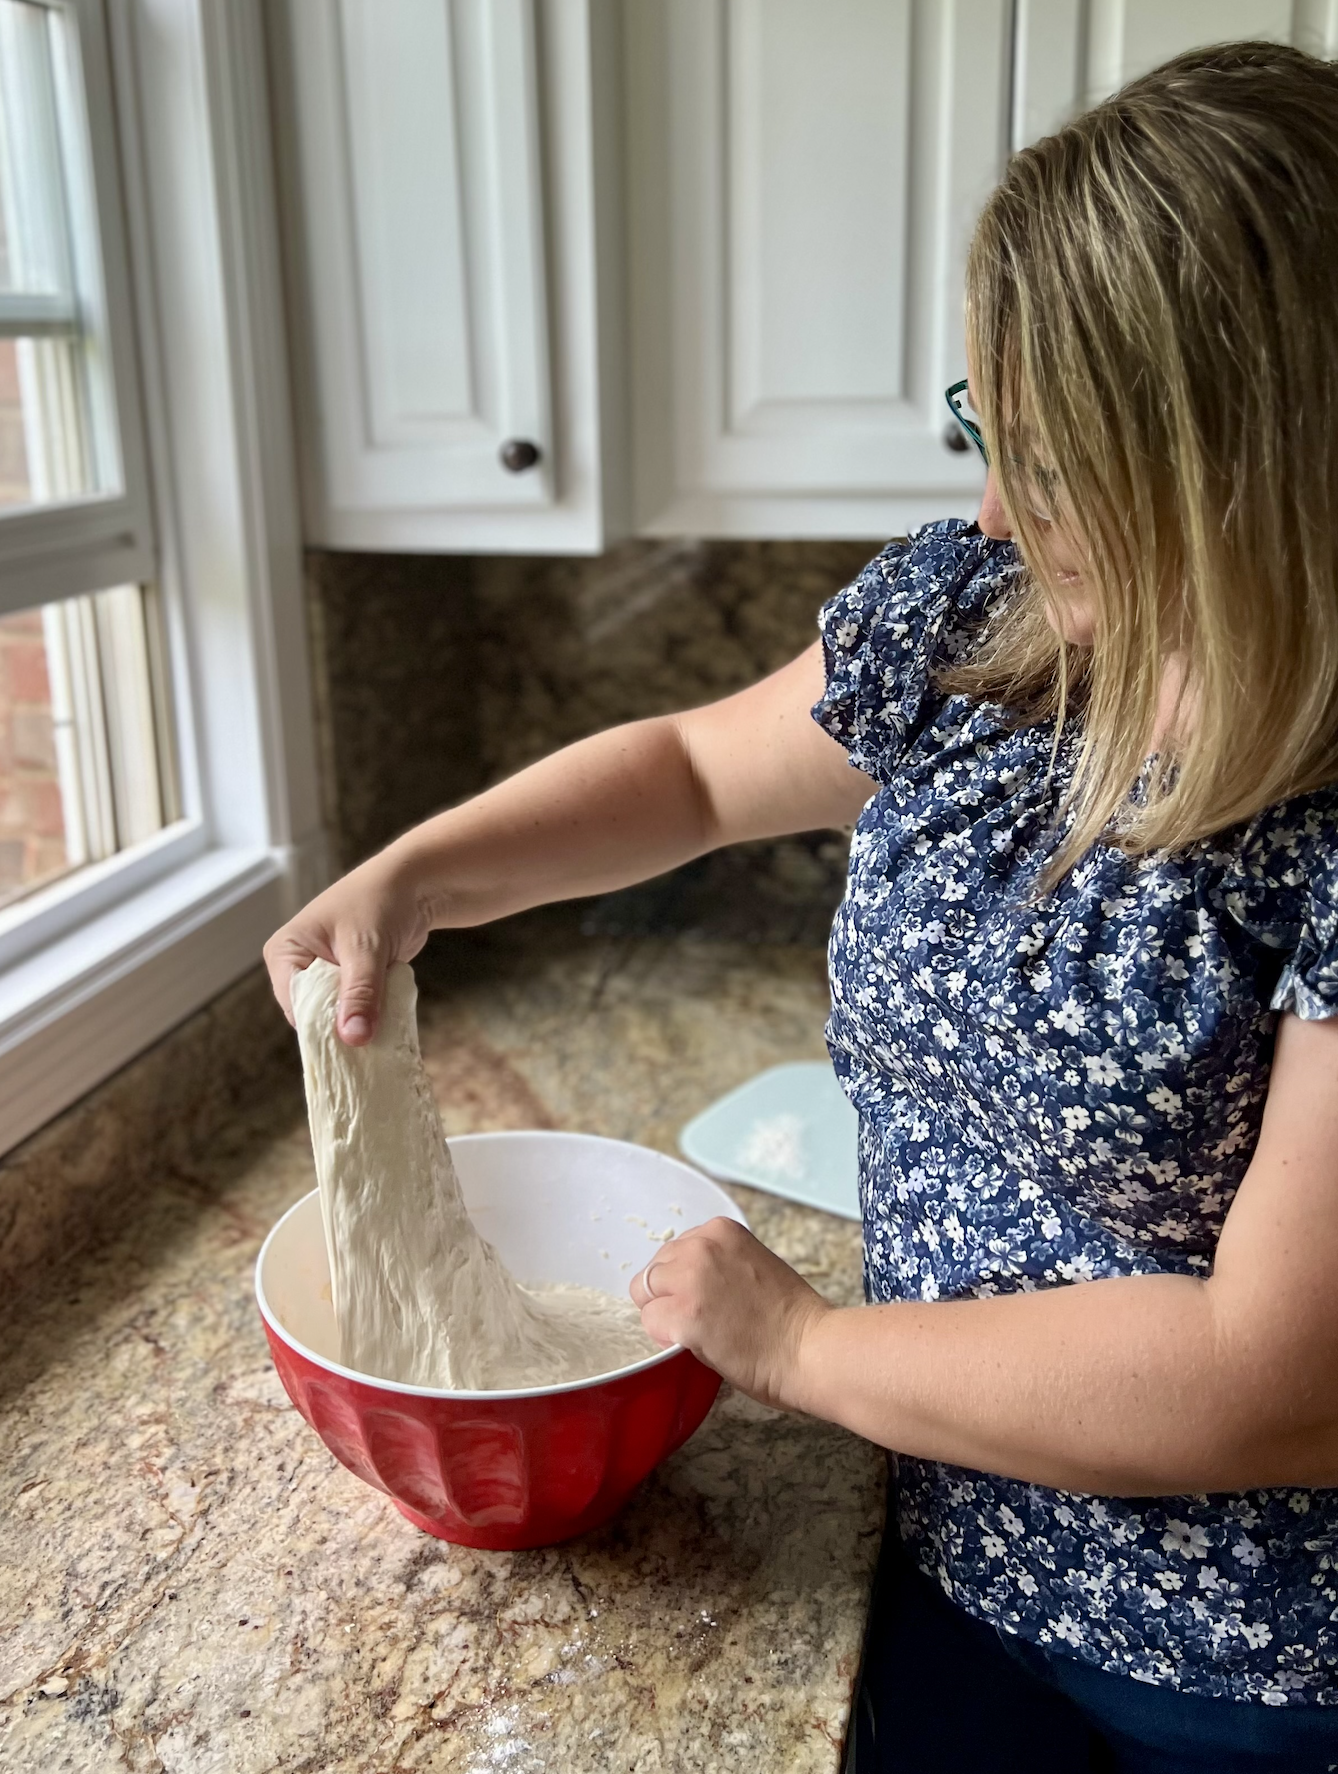 sourdough bread baker recipes classes influencer on social media @amybakesbread in Kentucky United States 3